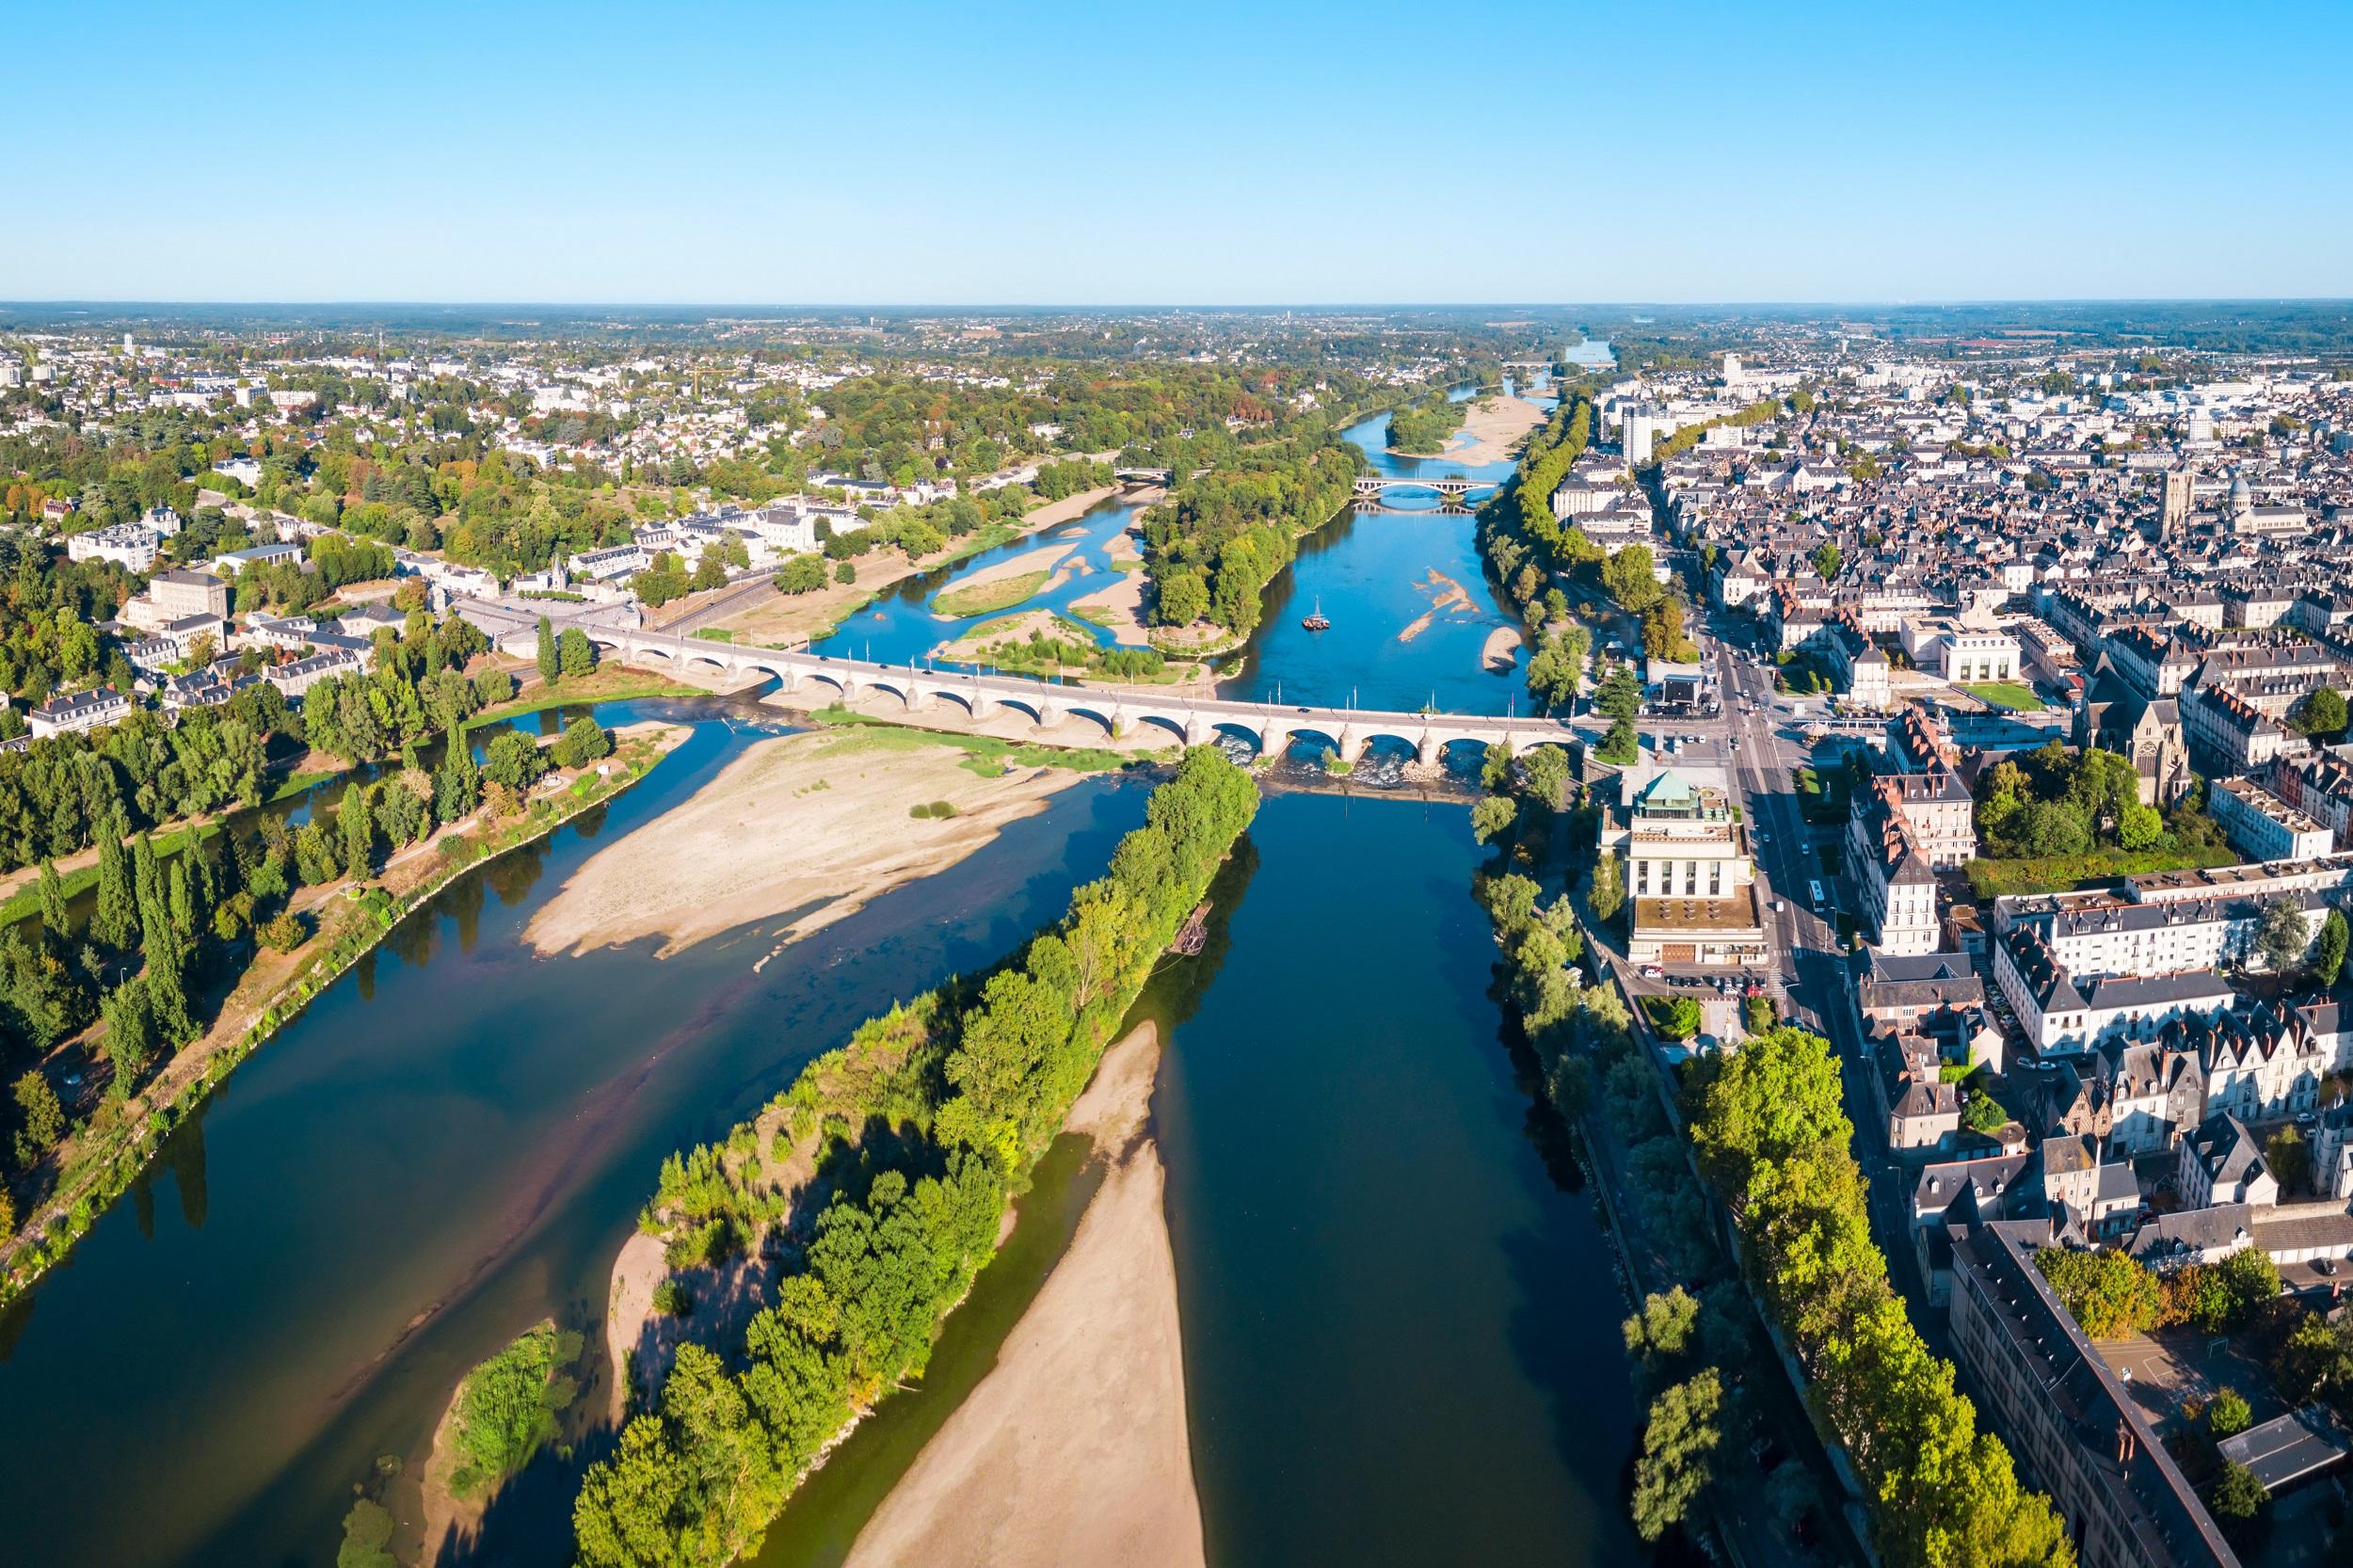 frankrijk-tours-rivier-stedelijk